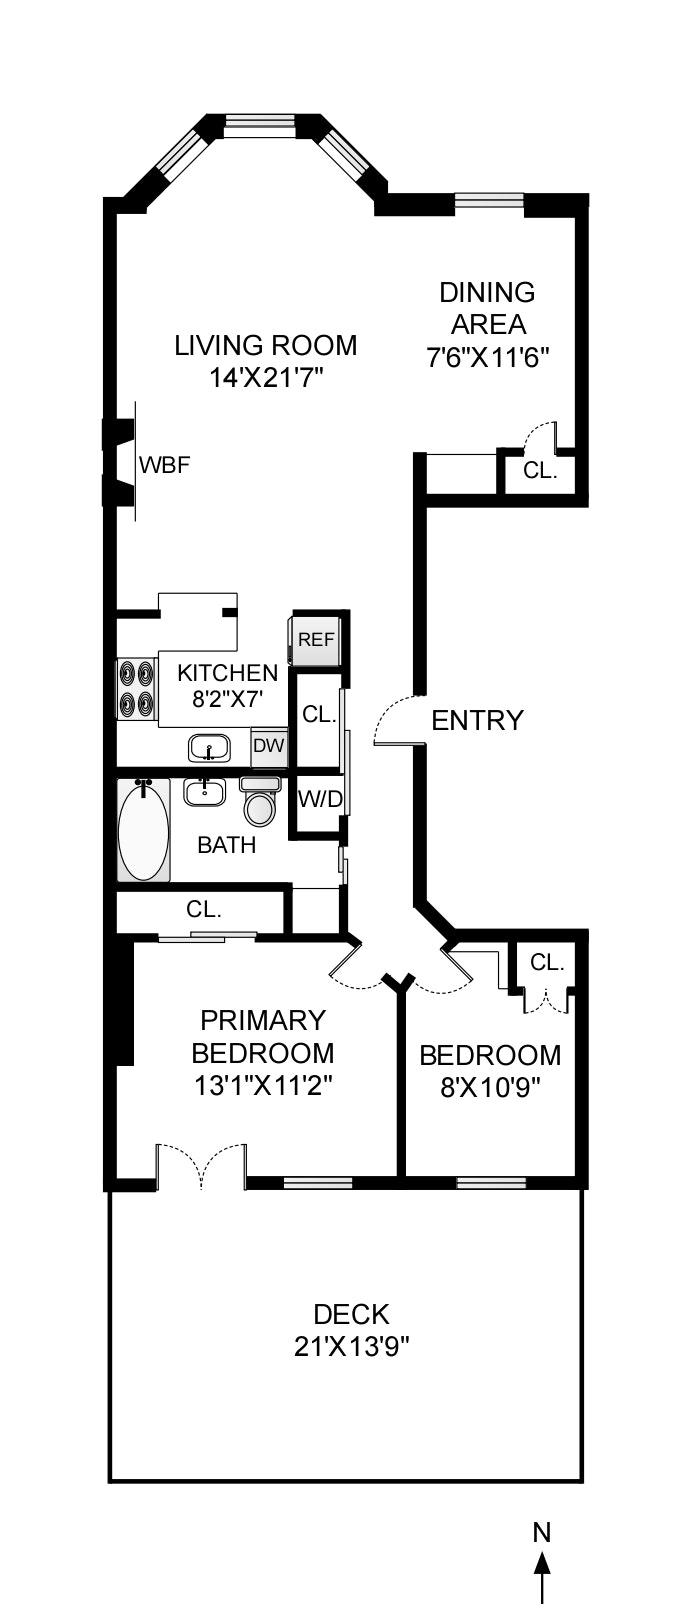 Floorplan for 214 Saint Johns Place, 3